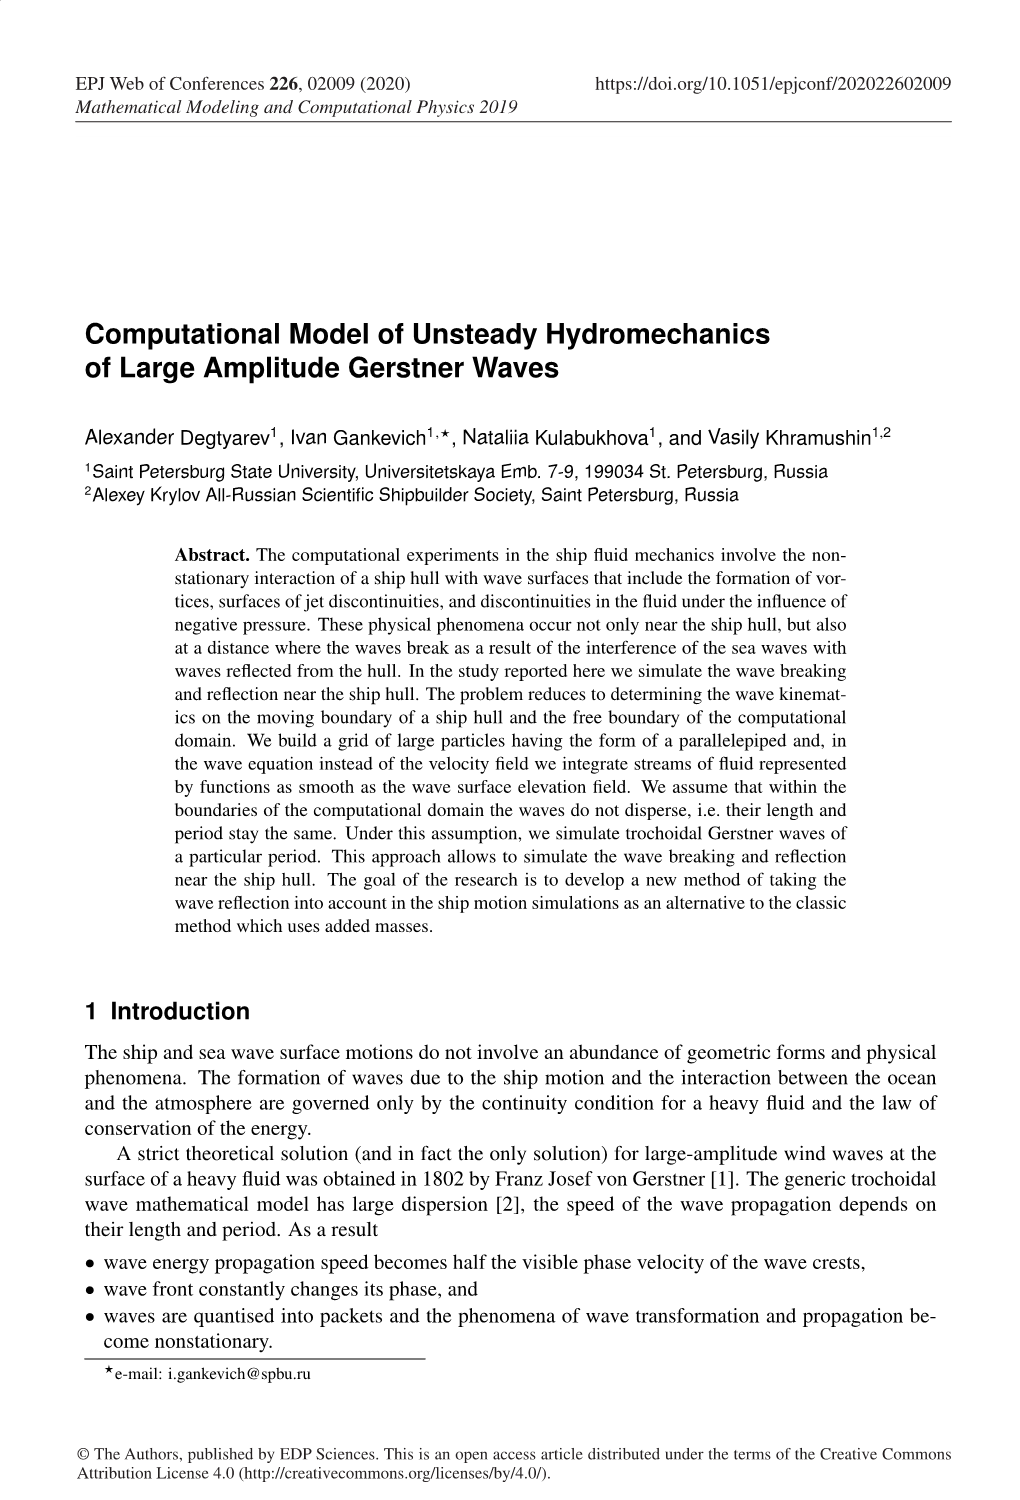 Computational Model of Unsteady Hydromechanics of Large Amplitude Gerstner Waves